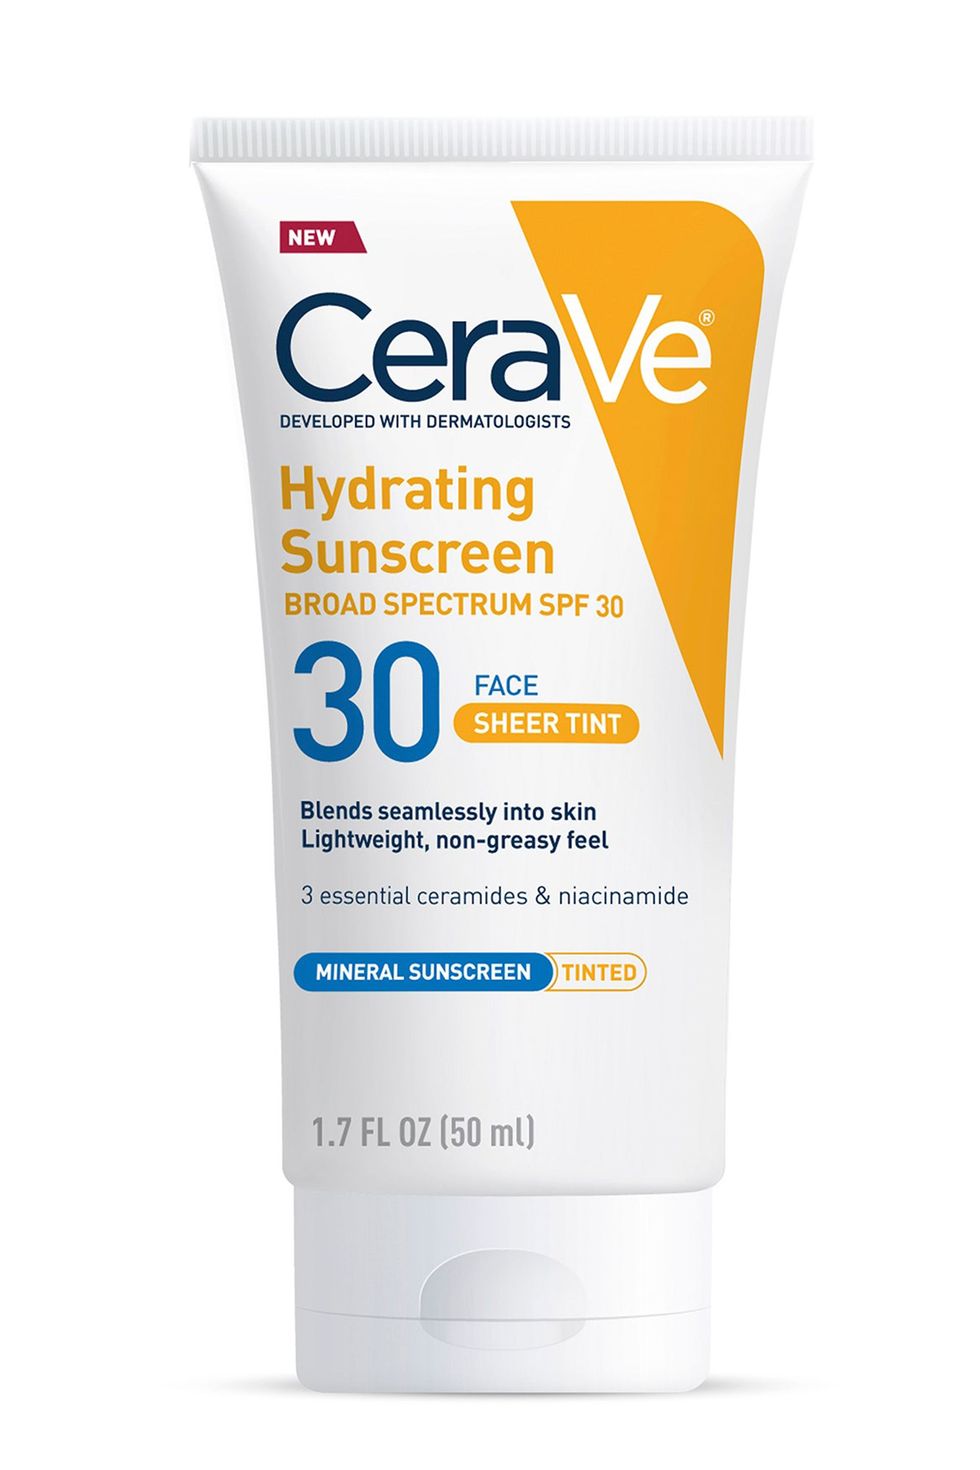 Face Sheer Tint Hydrating Sunscreen SPF 30